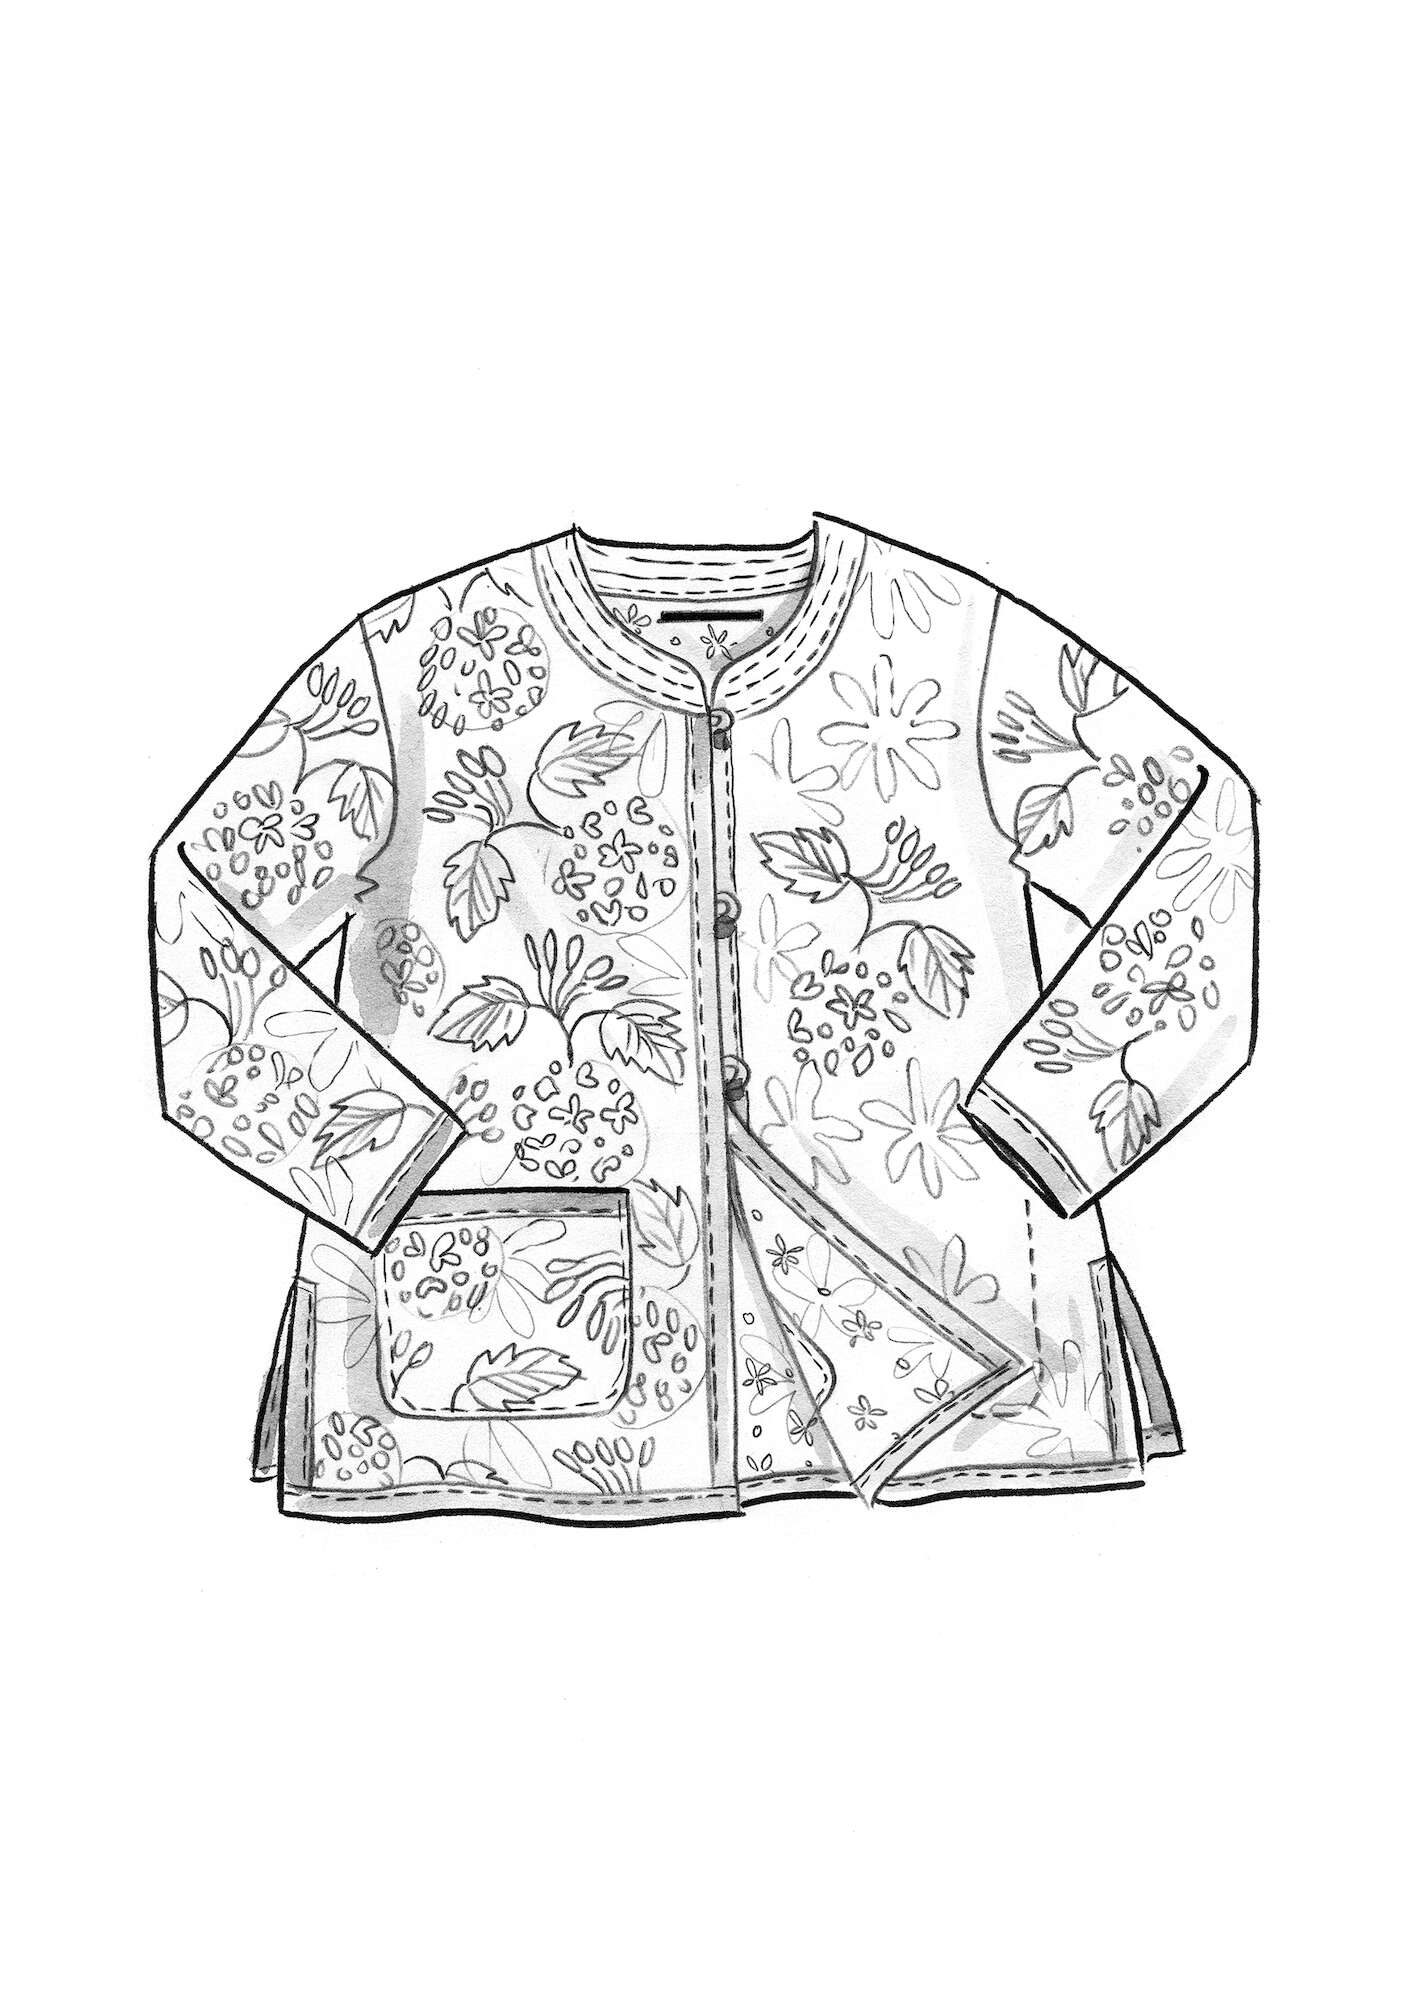 “Malkha” quilted jacket in organic cotton indigo